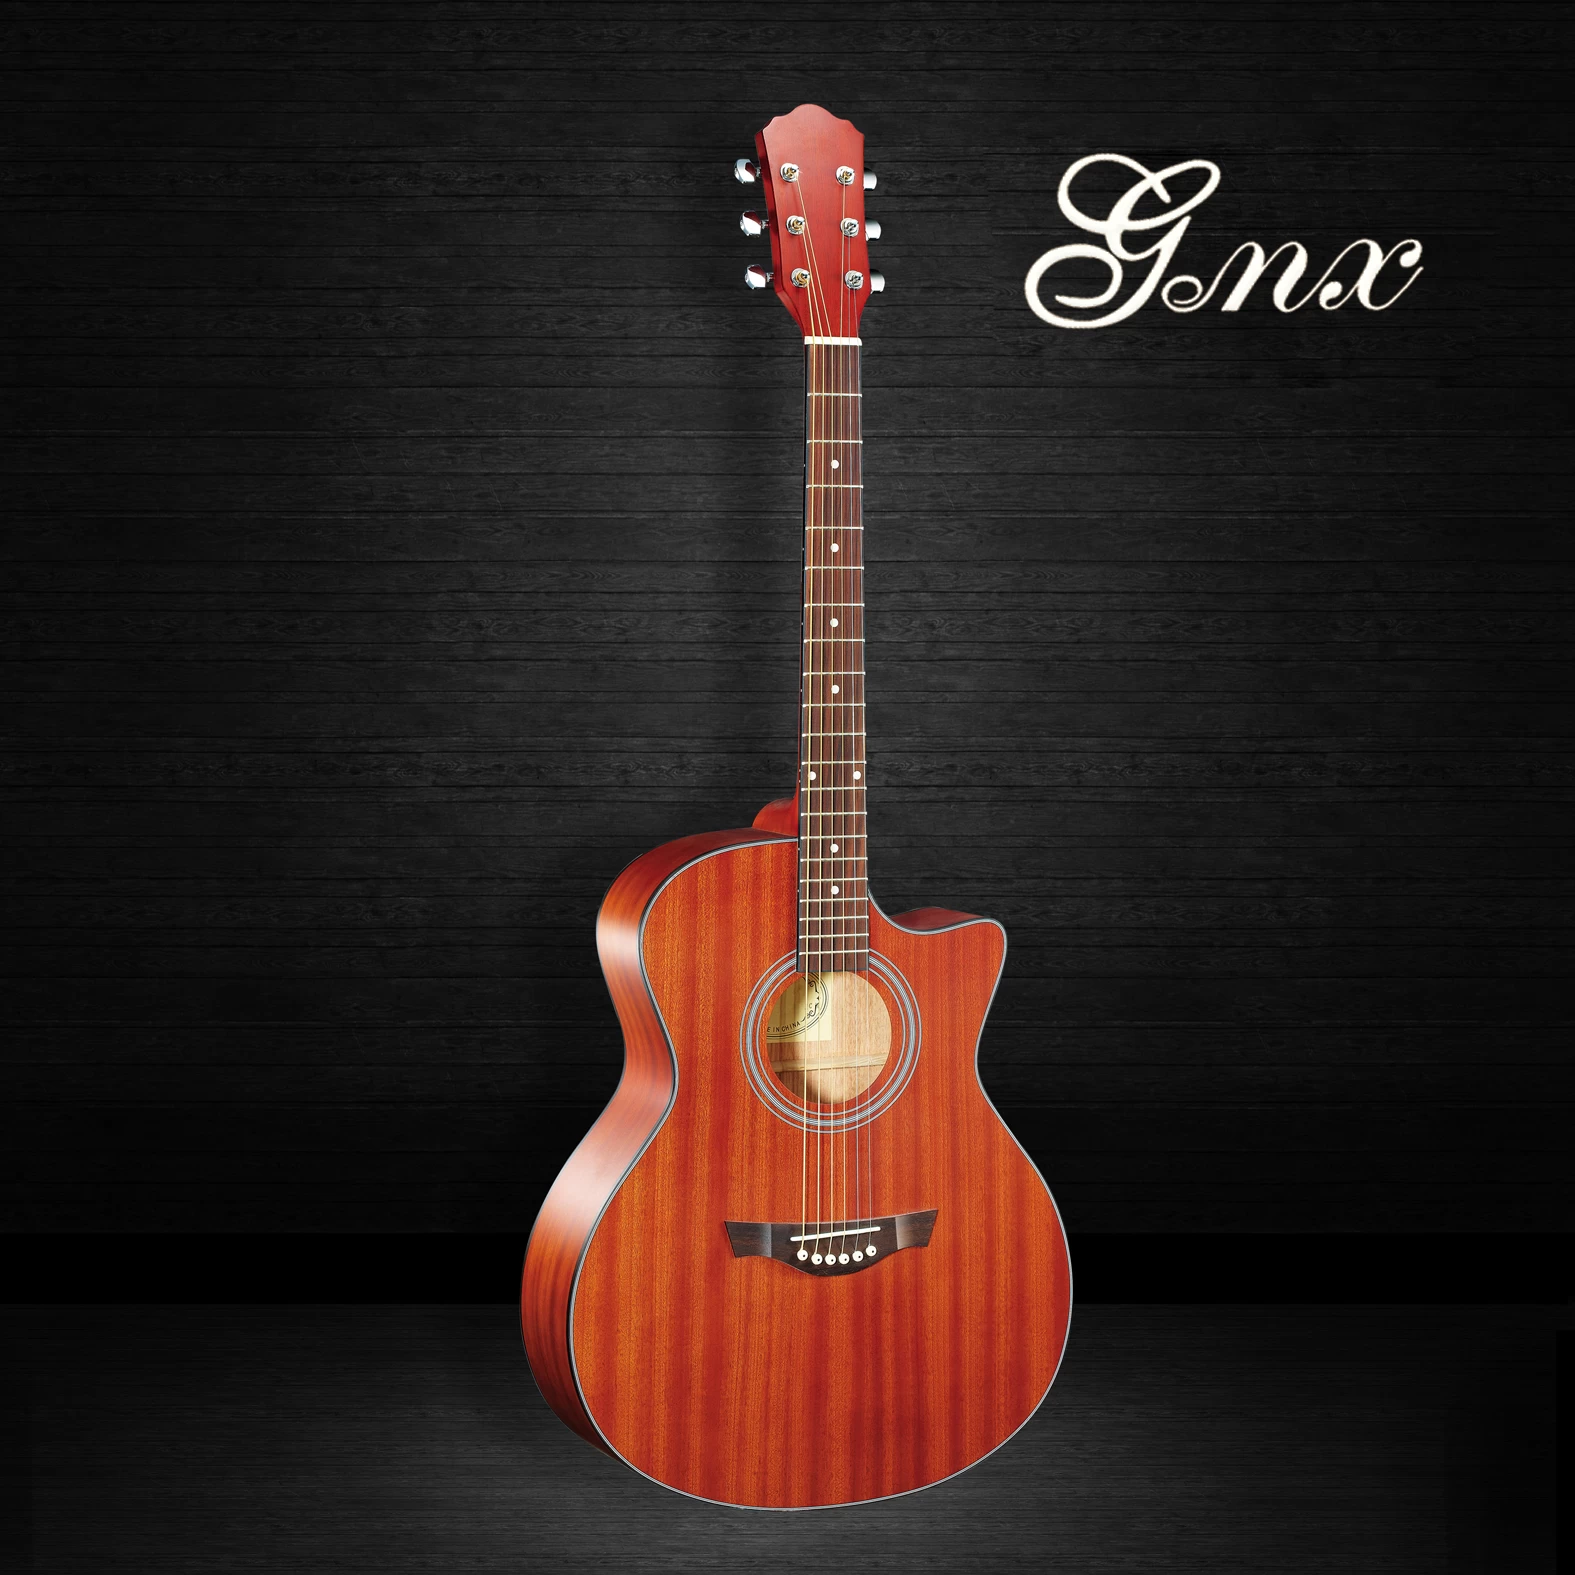 Gelamineerde mahonie terug nieuwe aankomst unieke design akoestische gitaar